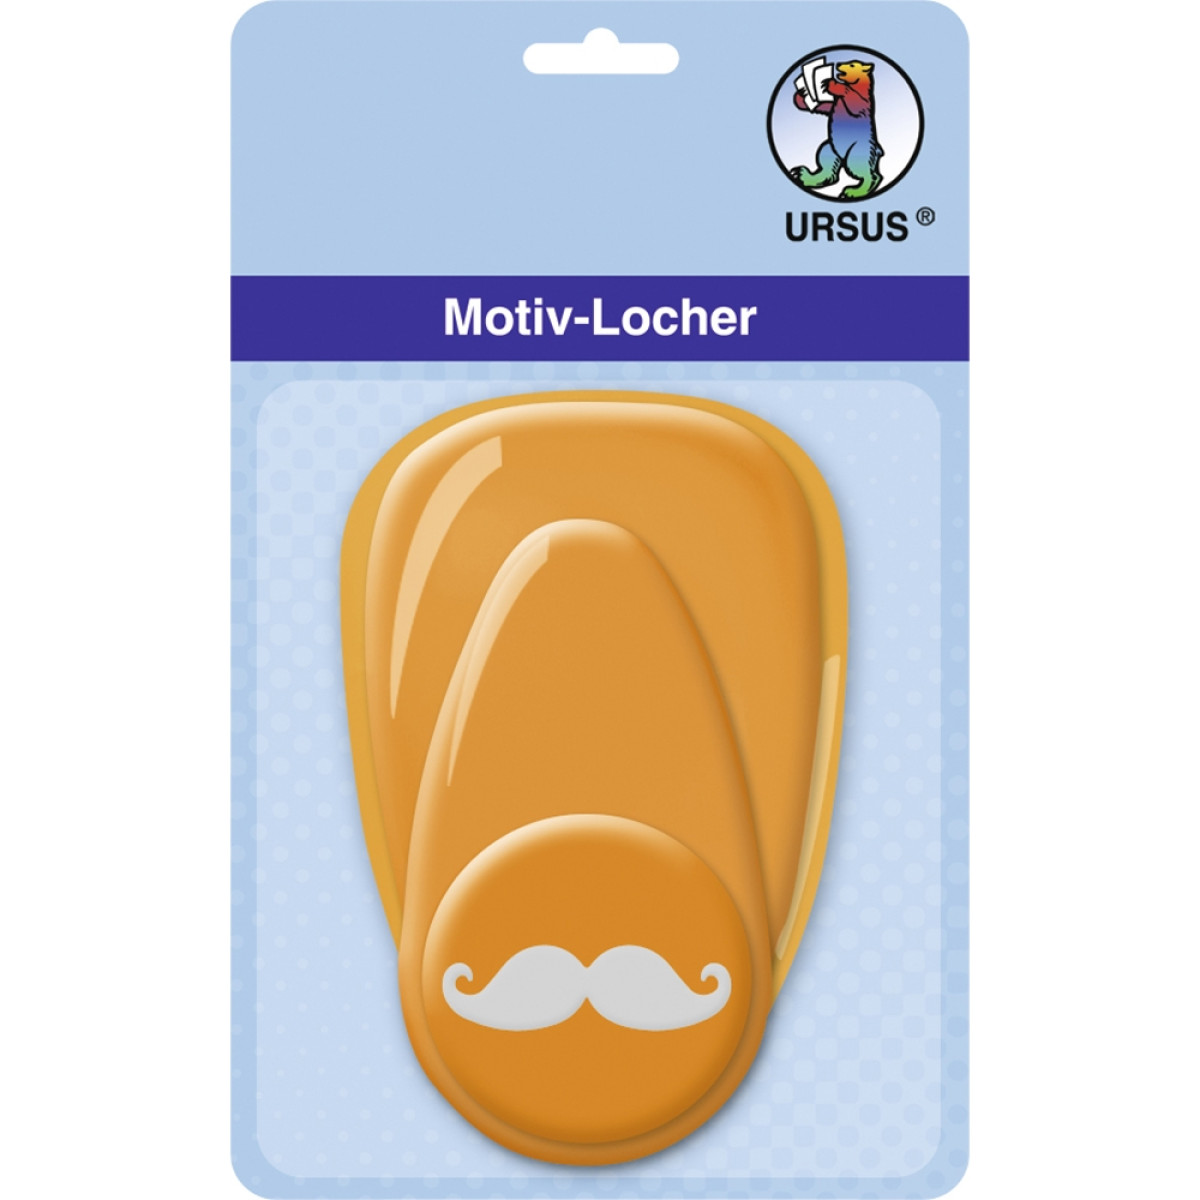 Motiv-Locher "mittel" Moustache